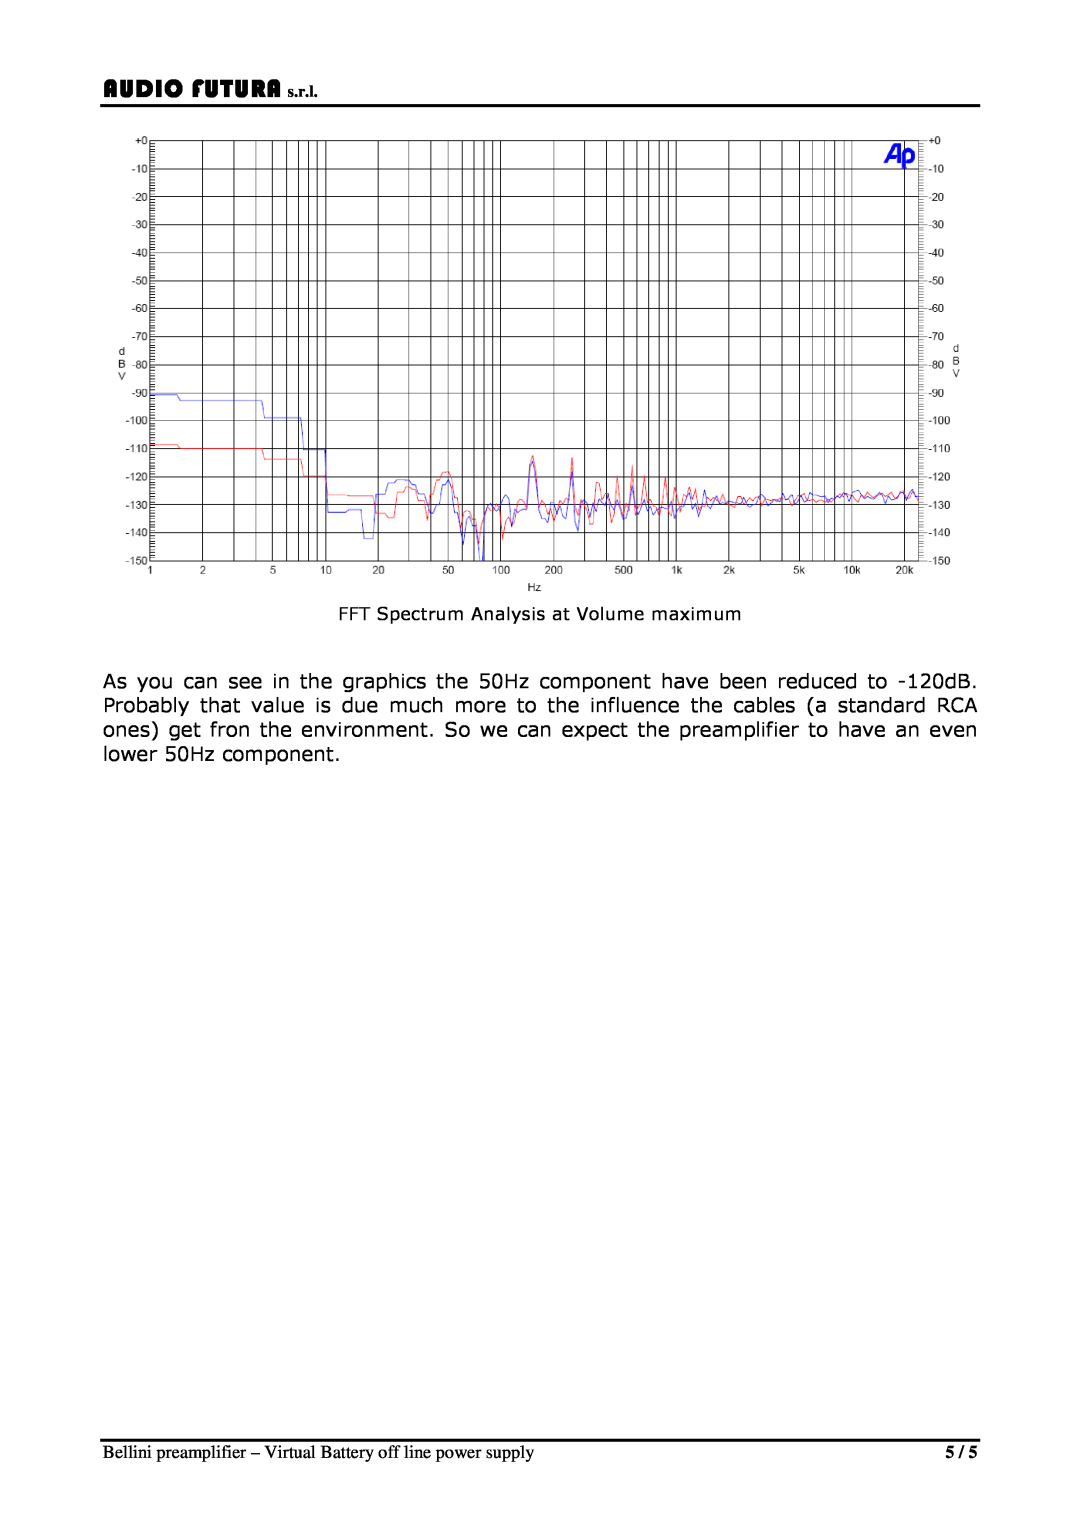 Audio Analogue SRL Bellini preamplifier manual AUDIO FUTURA s.r.l, FFT Spectrum Analysis at Volume maximum 